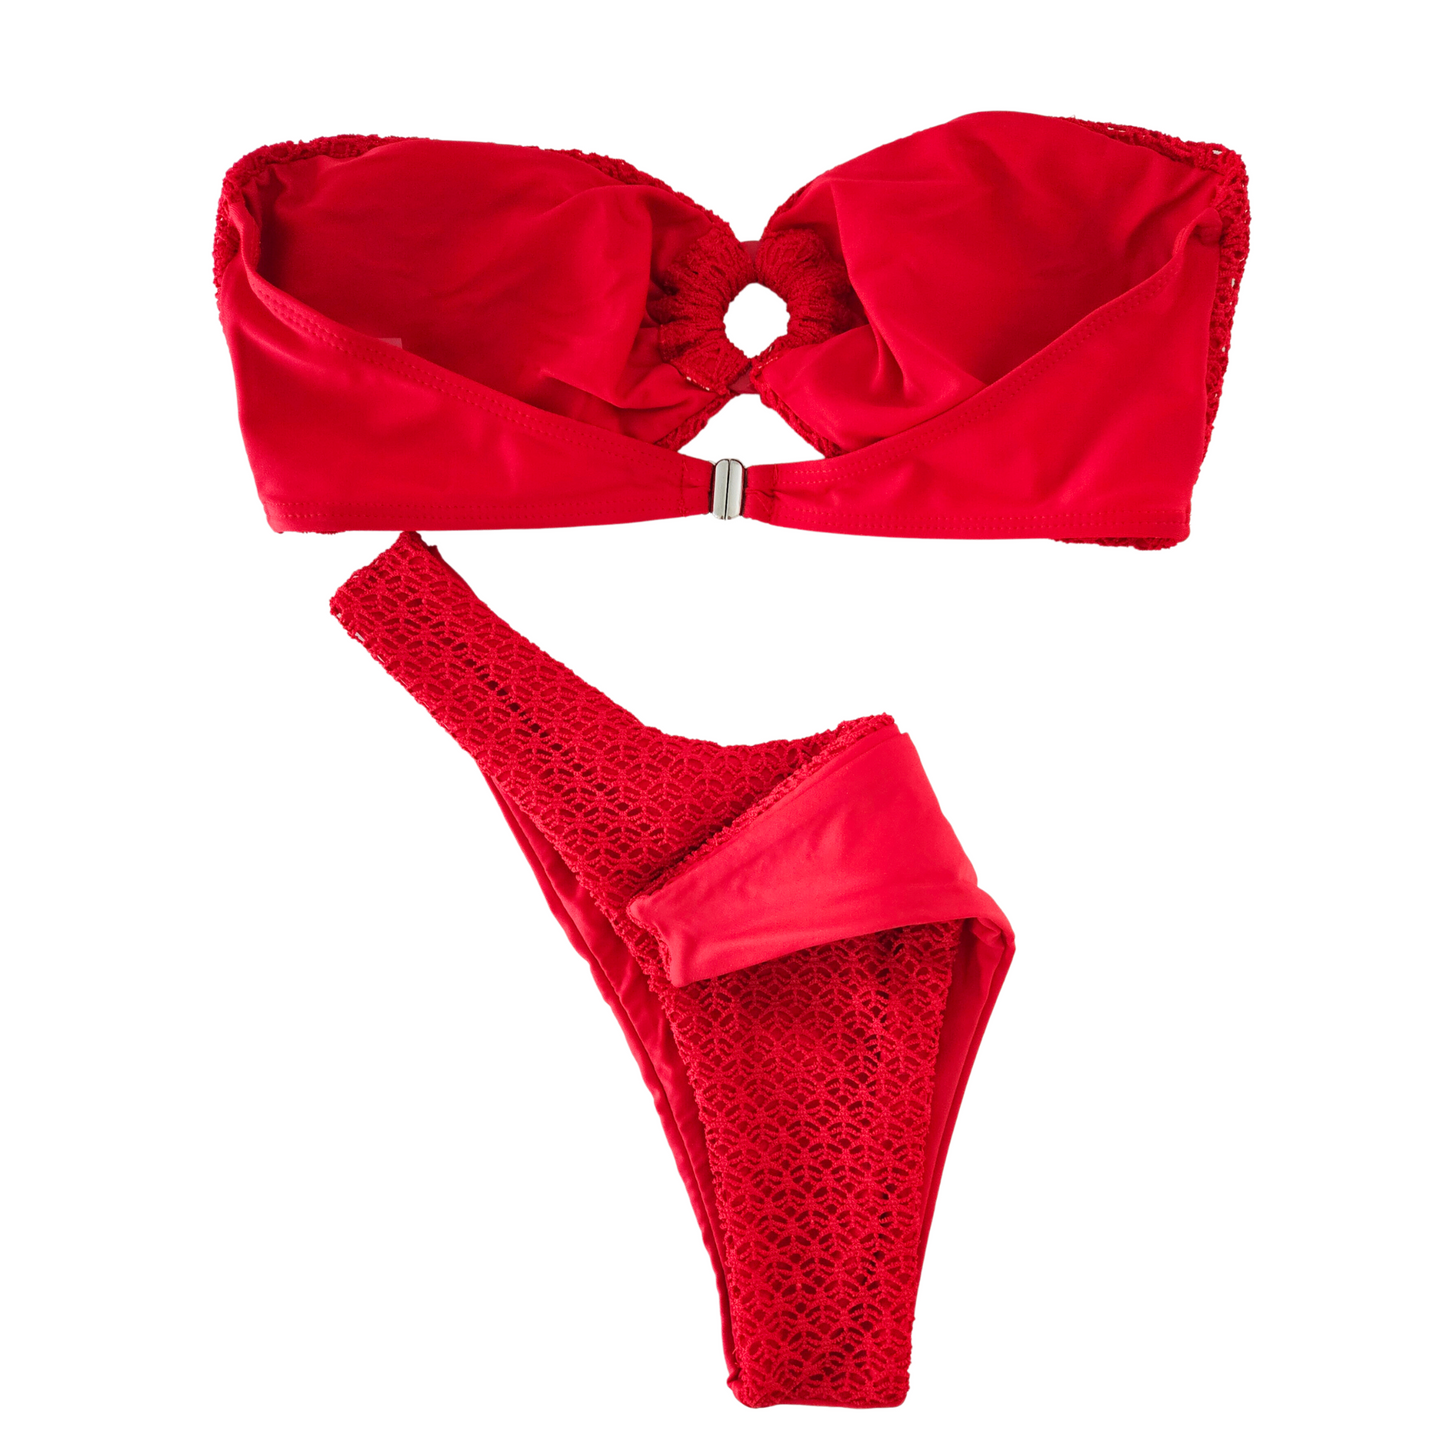 Bandeau Textured Red Tube Top Thong Bikini Set full image back